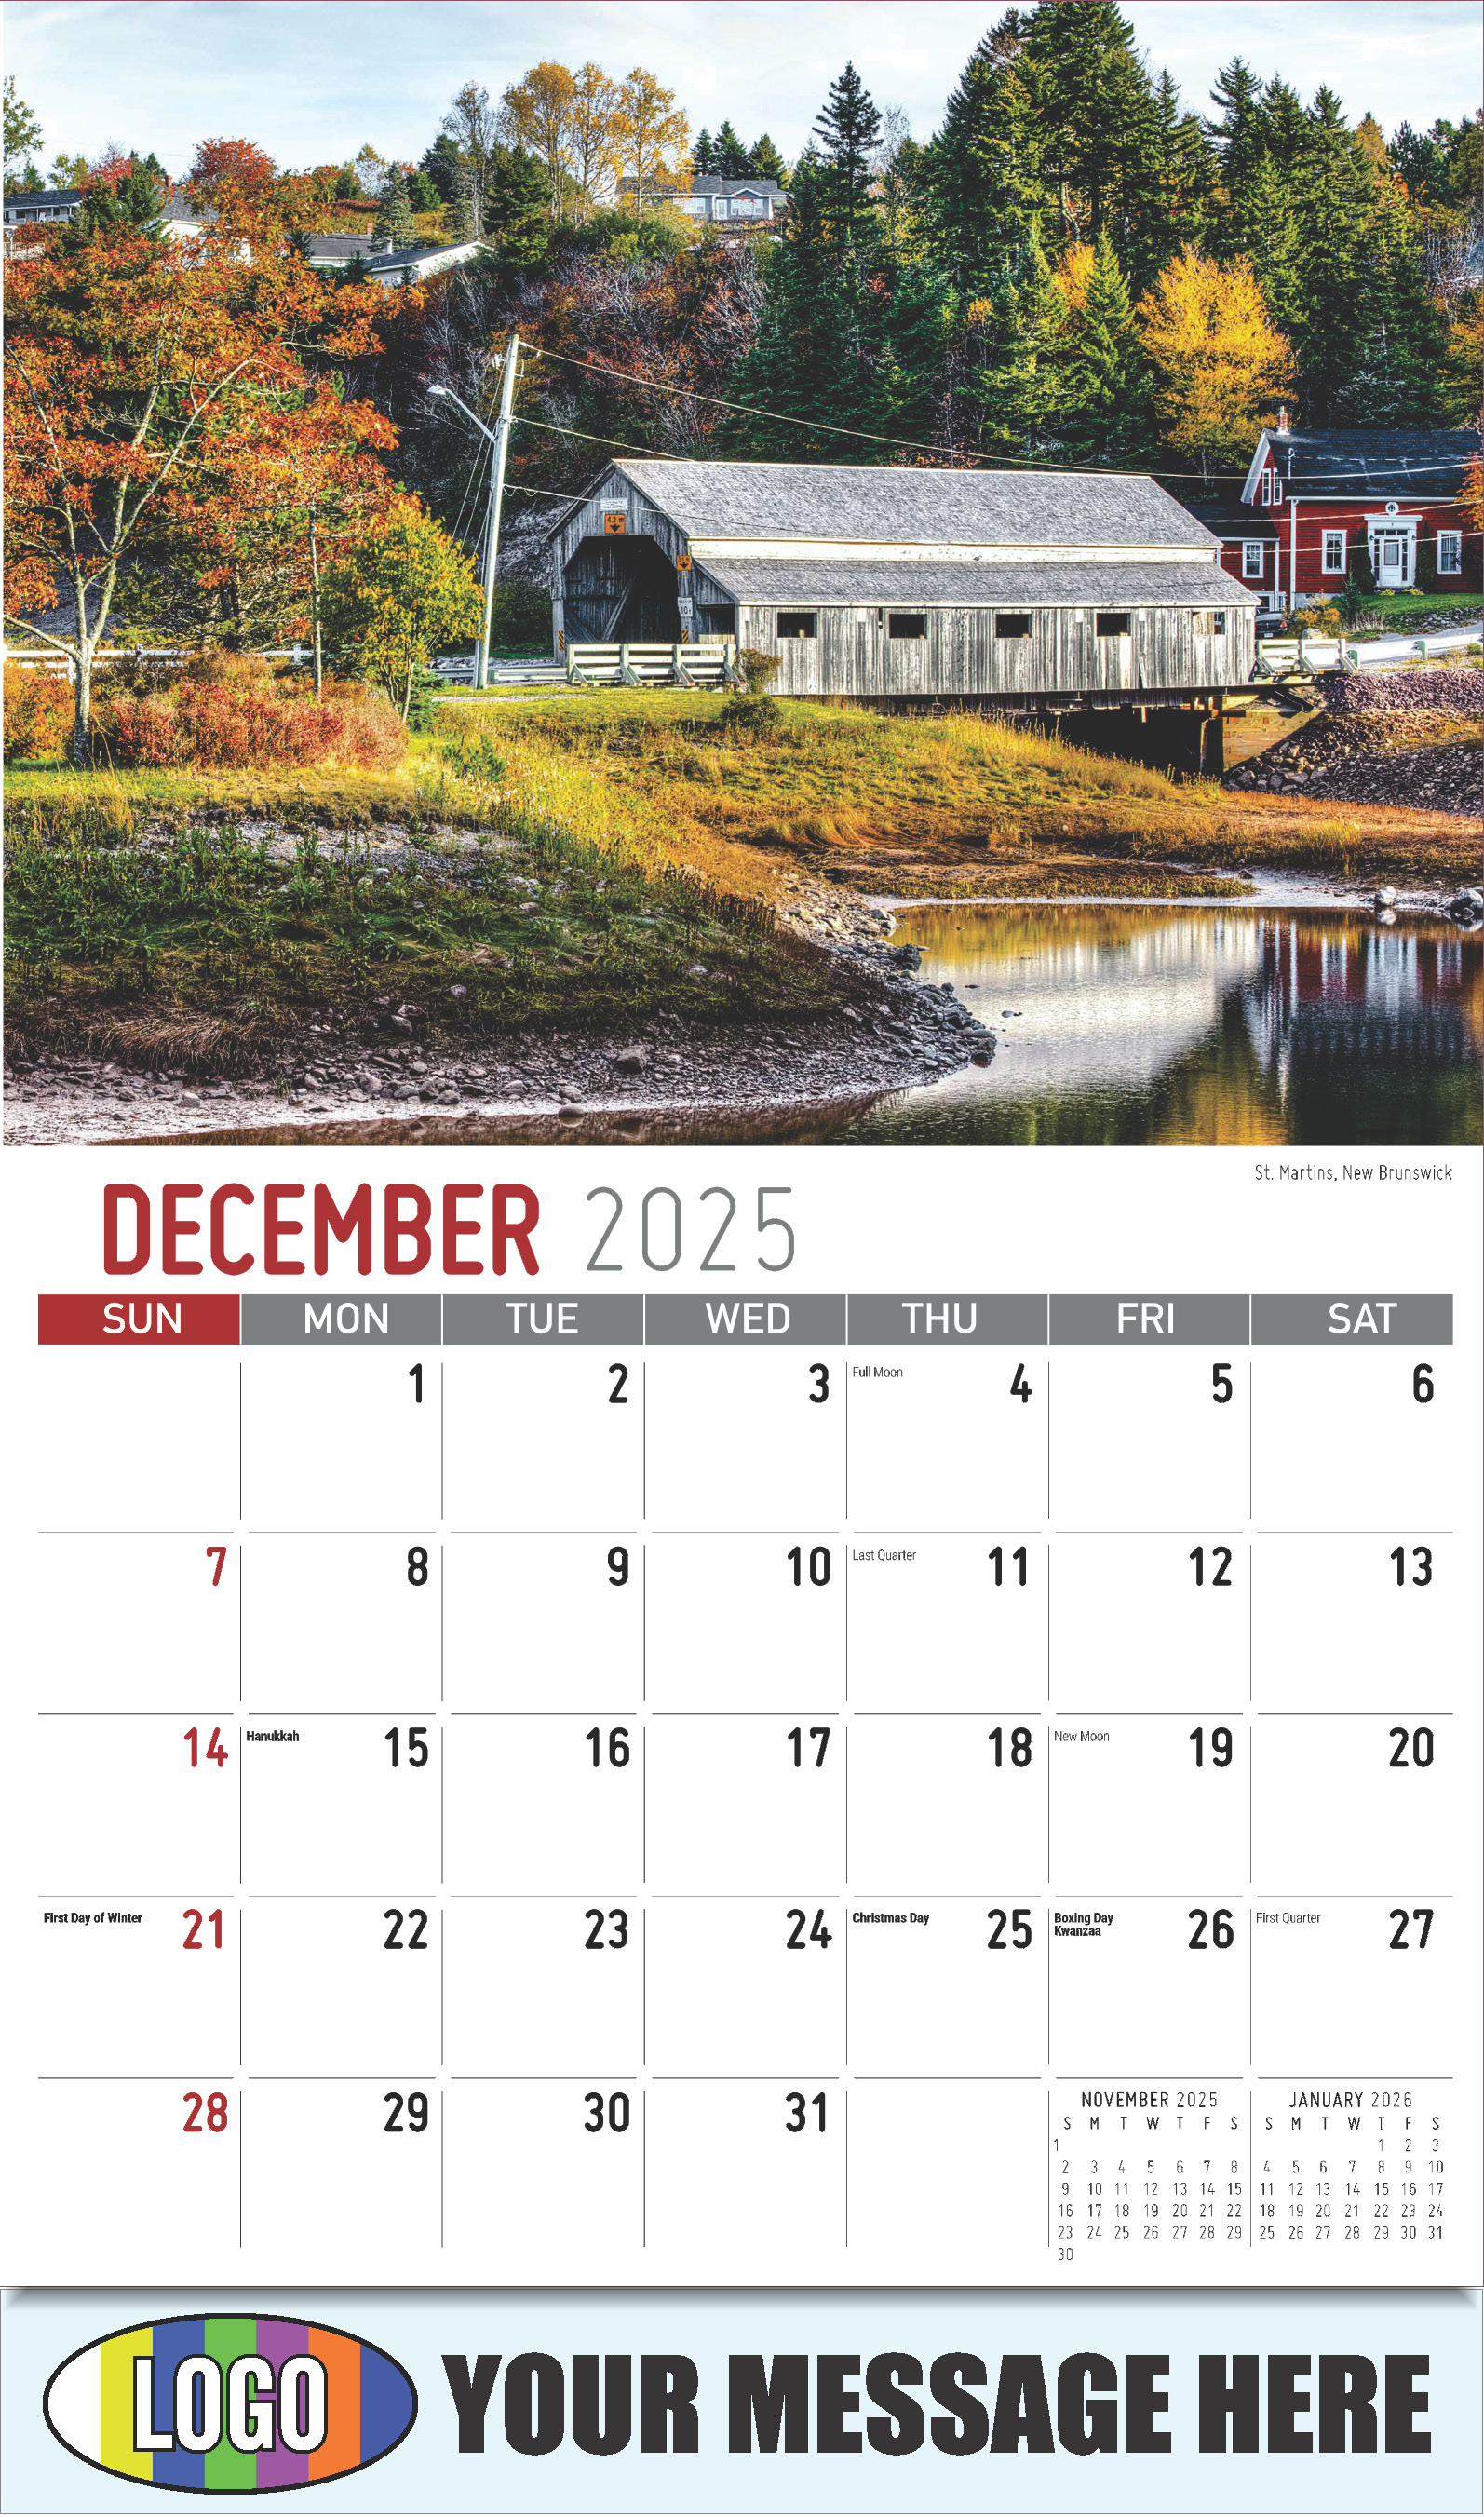 Atlantic Canada Scenic 2025 Business Promotion Calendar - December